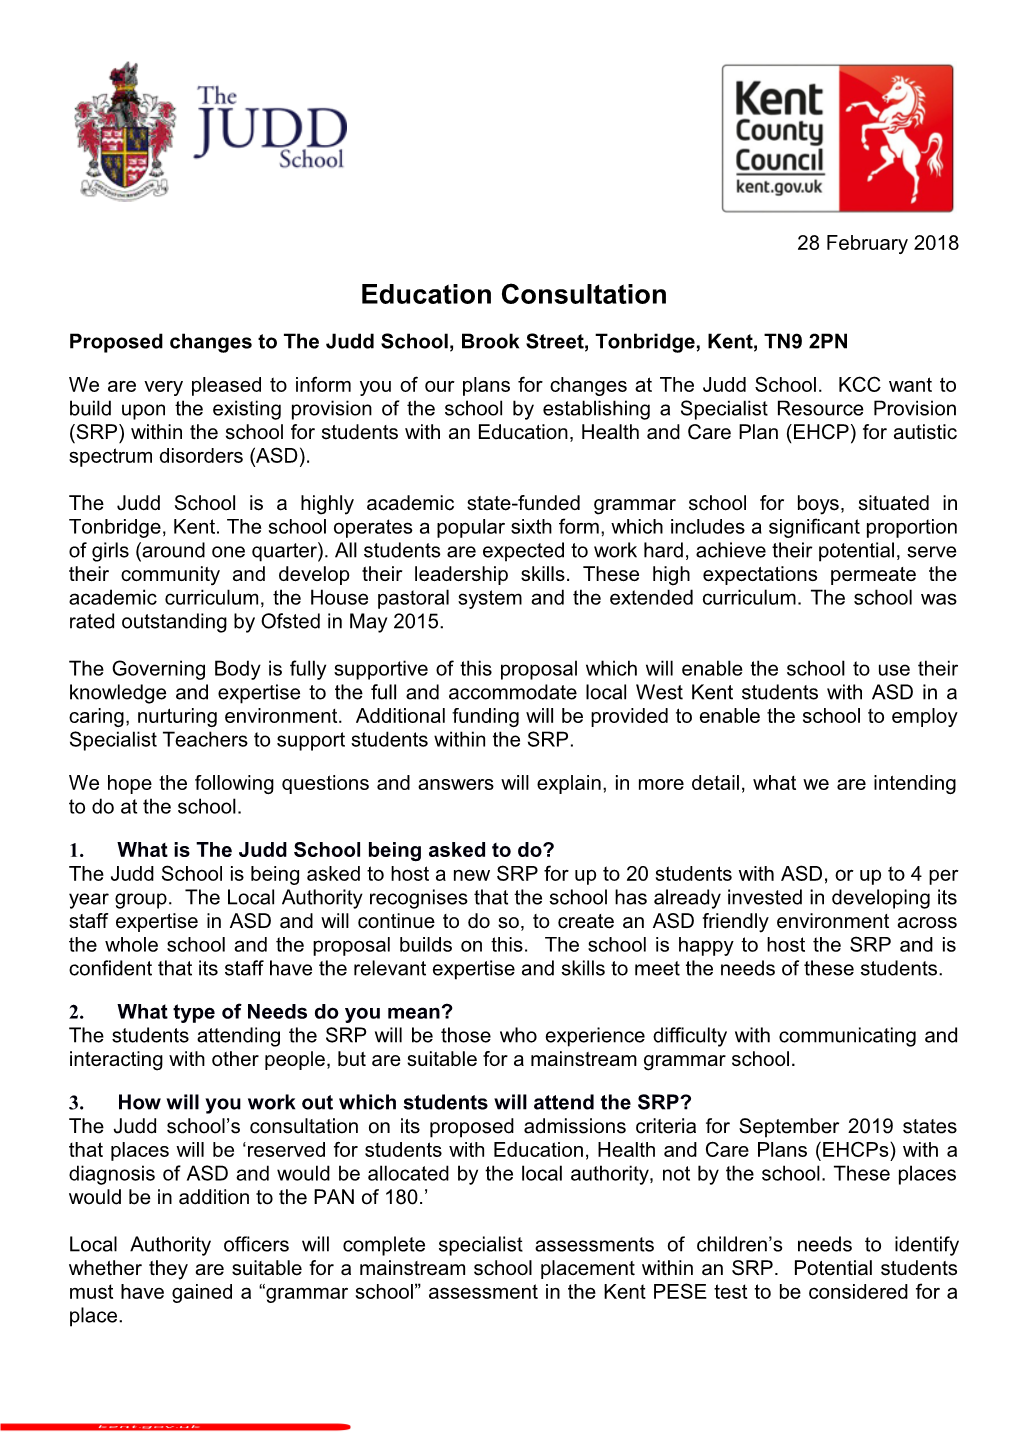 Proposed Changes to the Judd School, Brook Street, Tonbridge, Kent, TN9 2PN